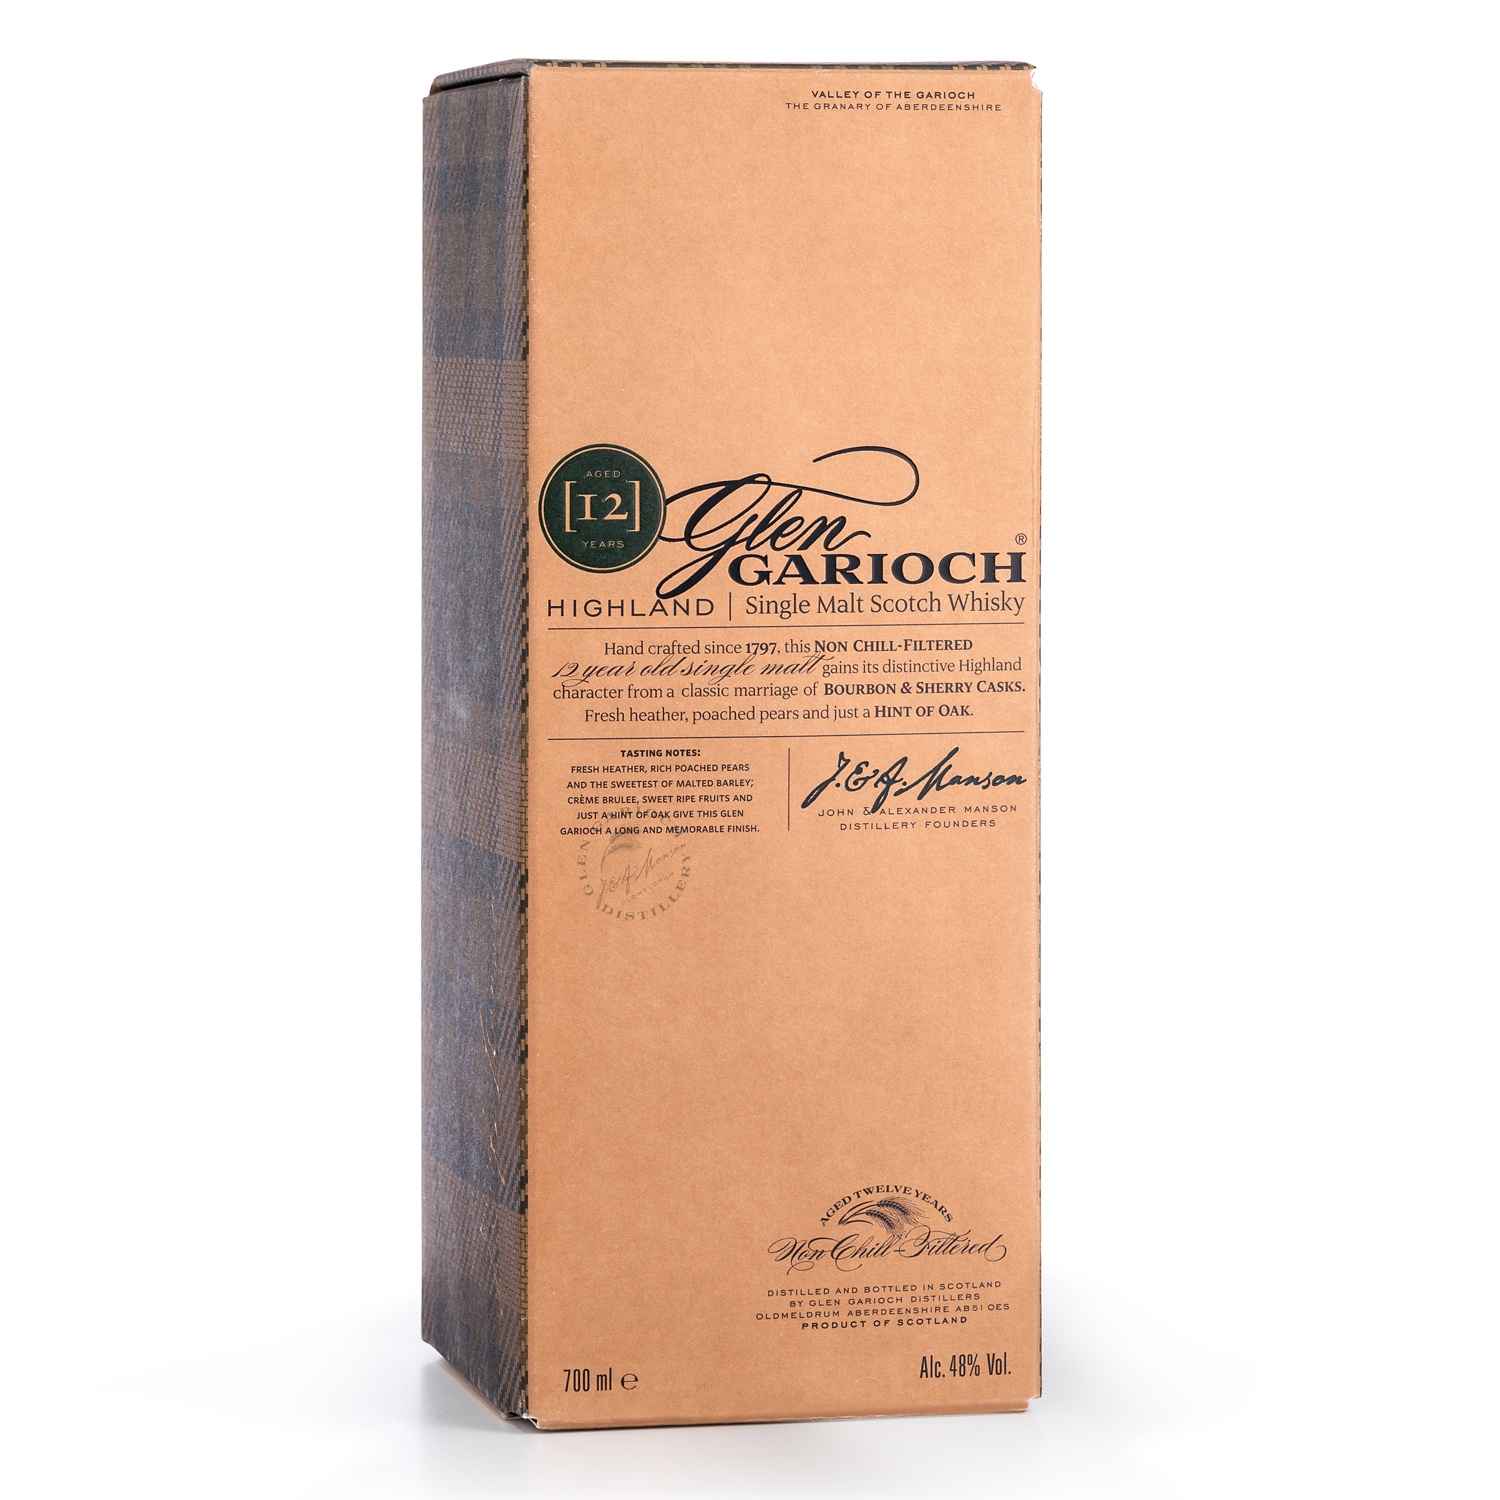 GLEN GARIOCH Single Malt Scotch Whisky